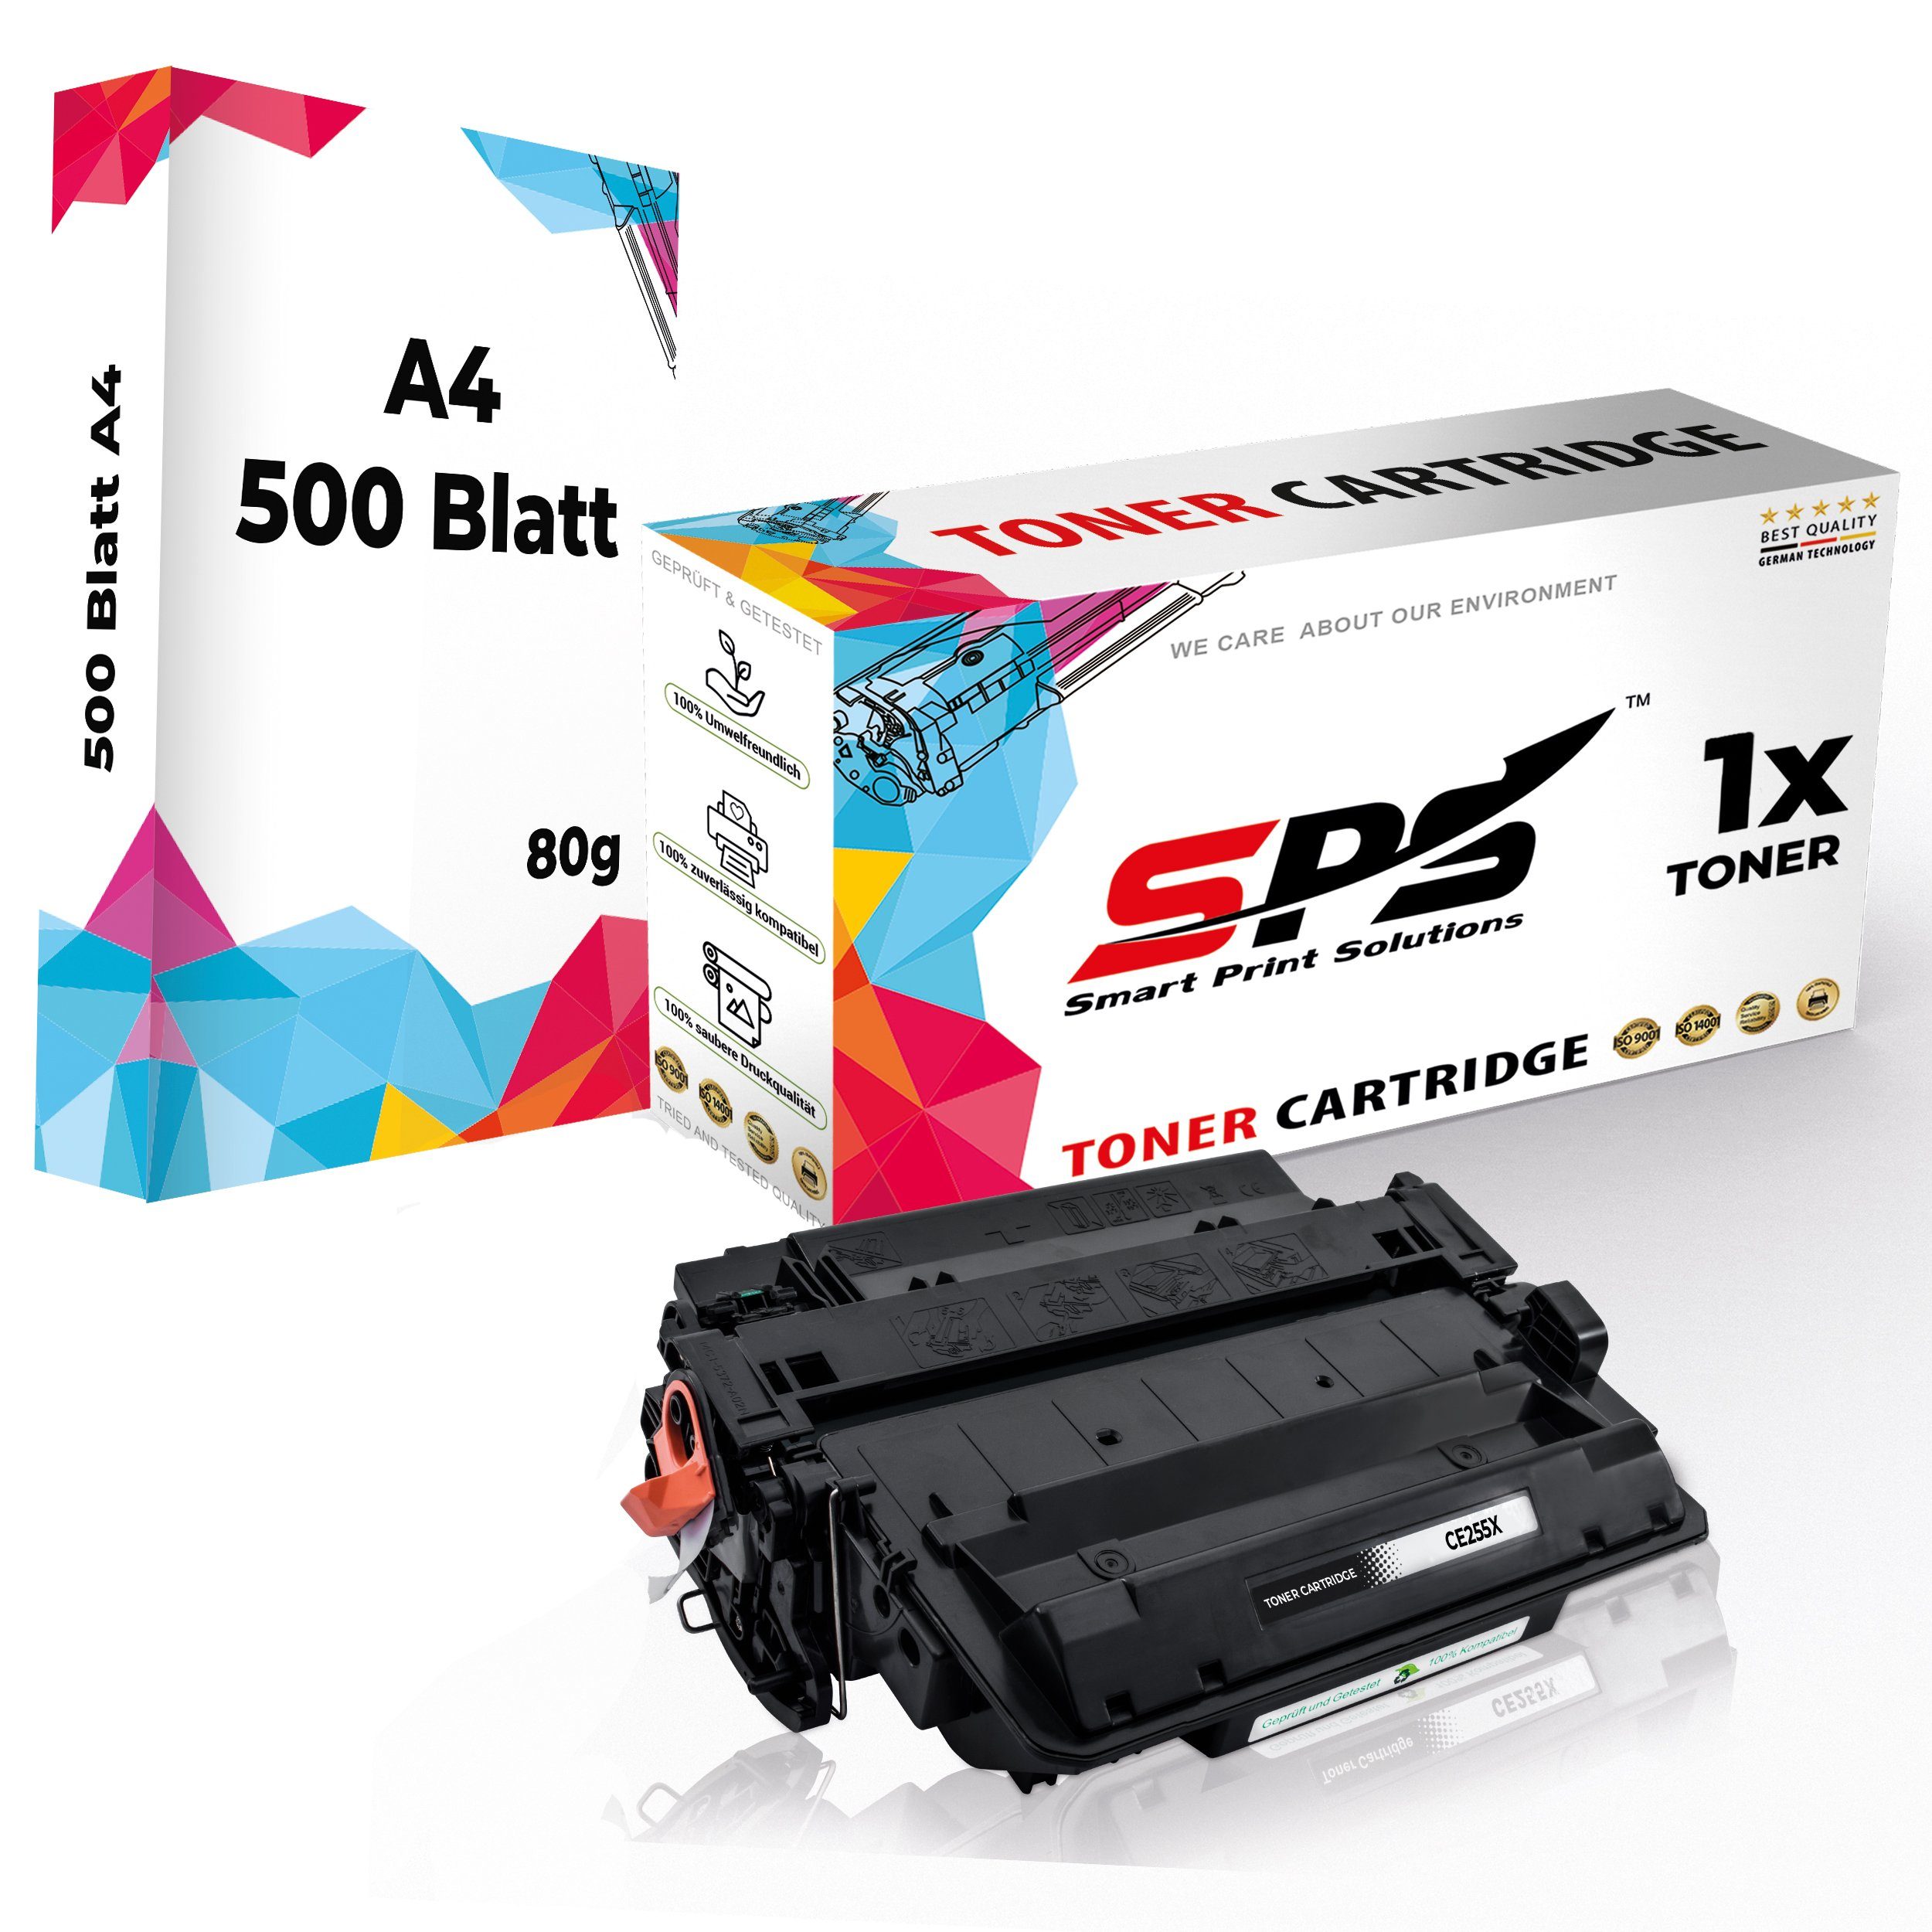 Enterprise + P3015 SPS Papier, 55X, Kompatibel Pack (1er für Laserjet Schwarz Toner) A4 1x HP Tonerkartusche